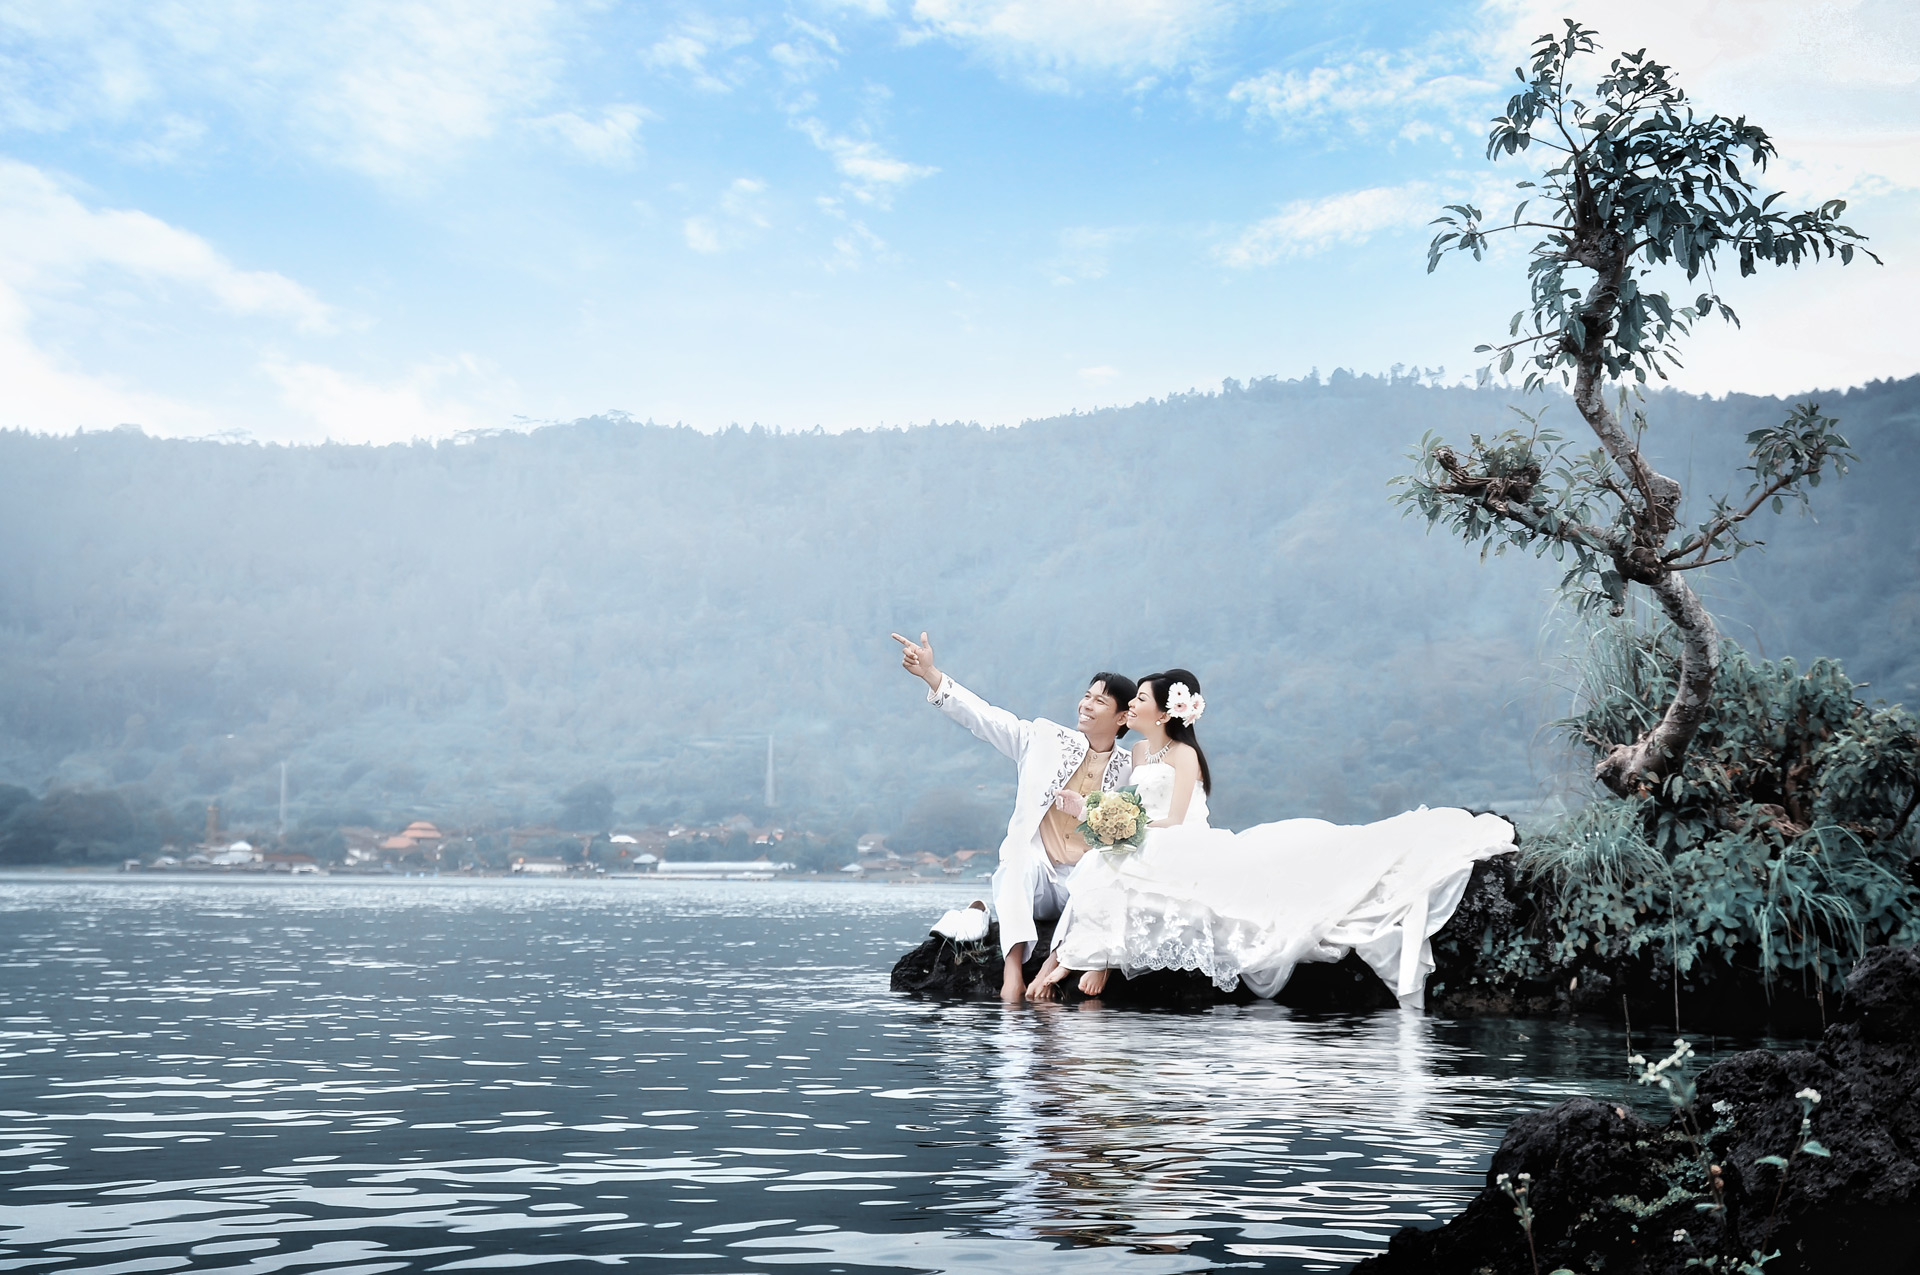 pre wedding photograph in lake batur kintamani - the bali channel